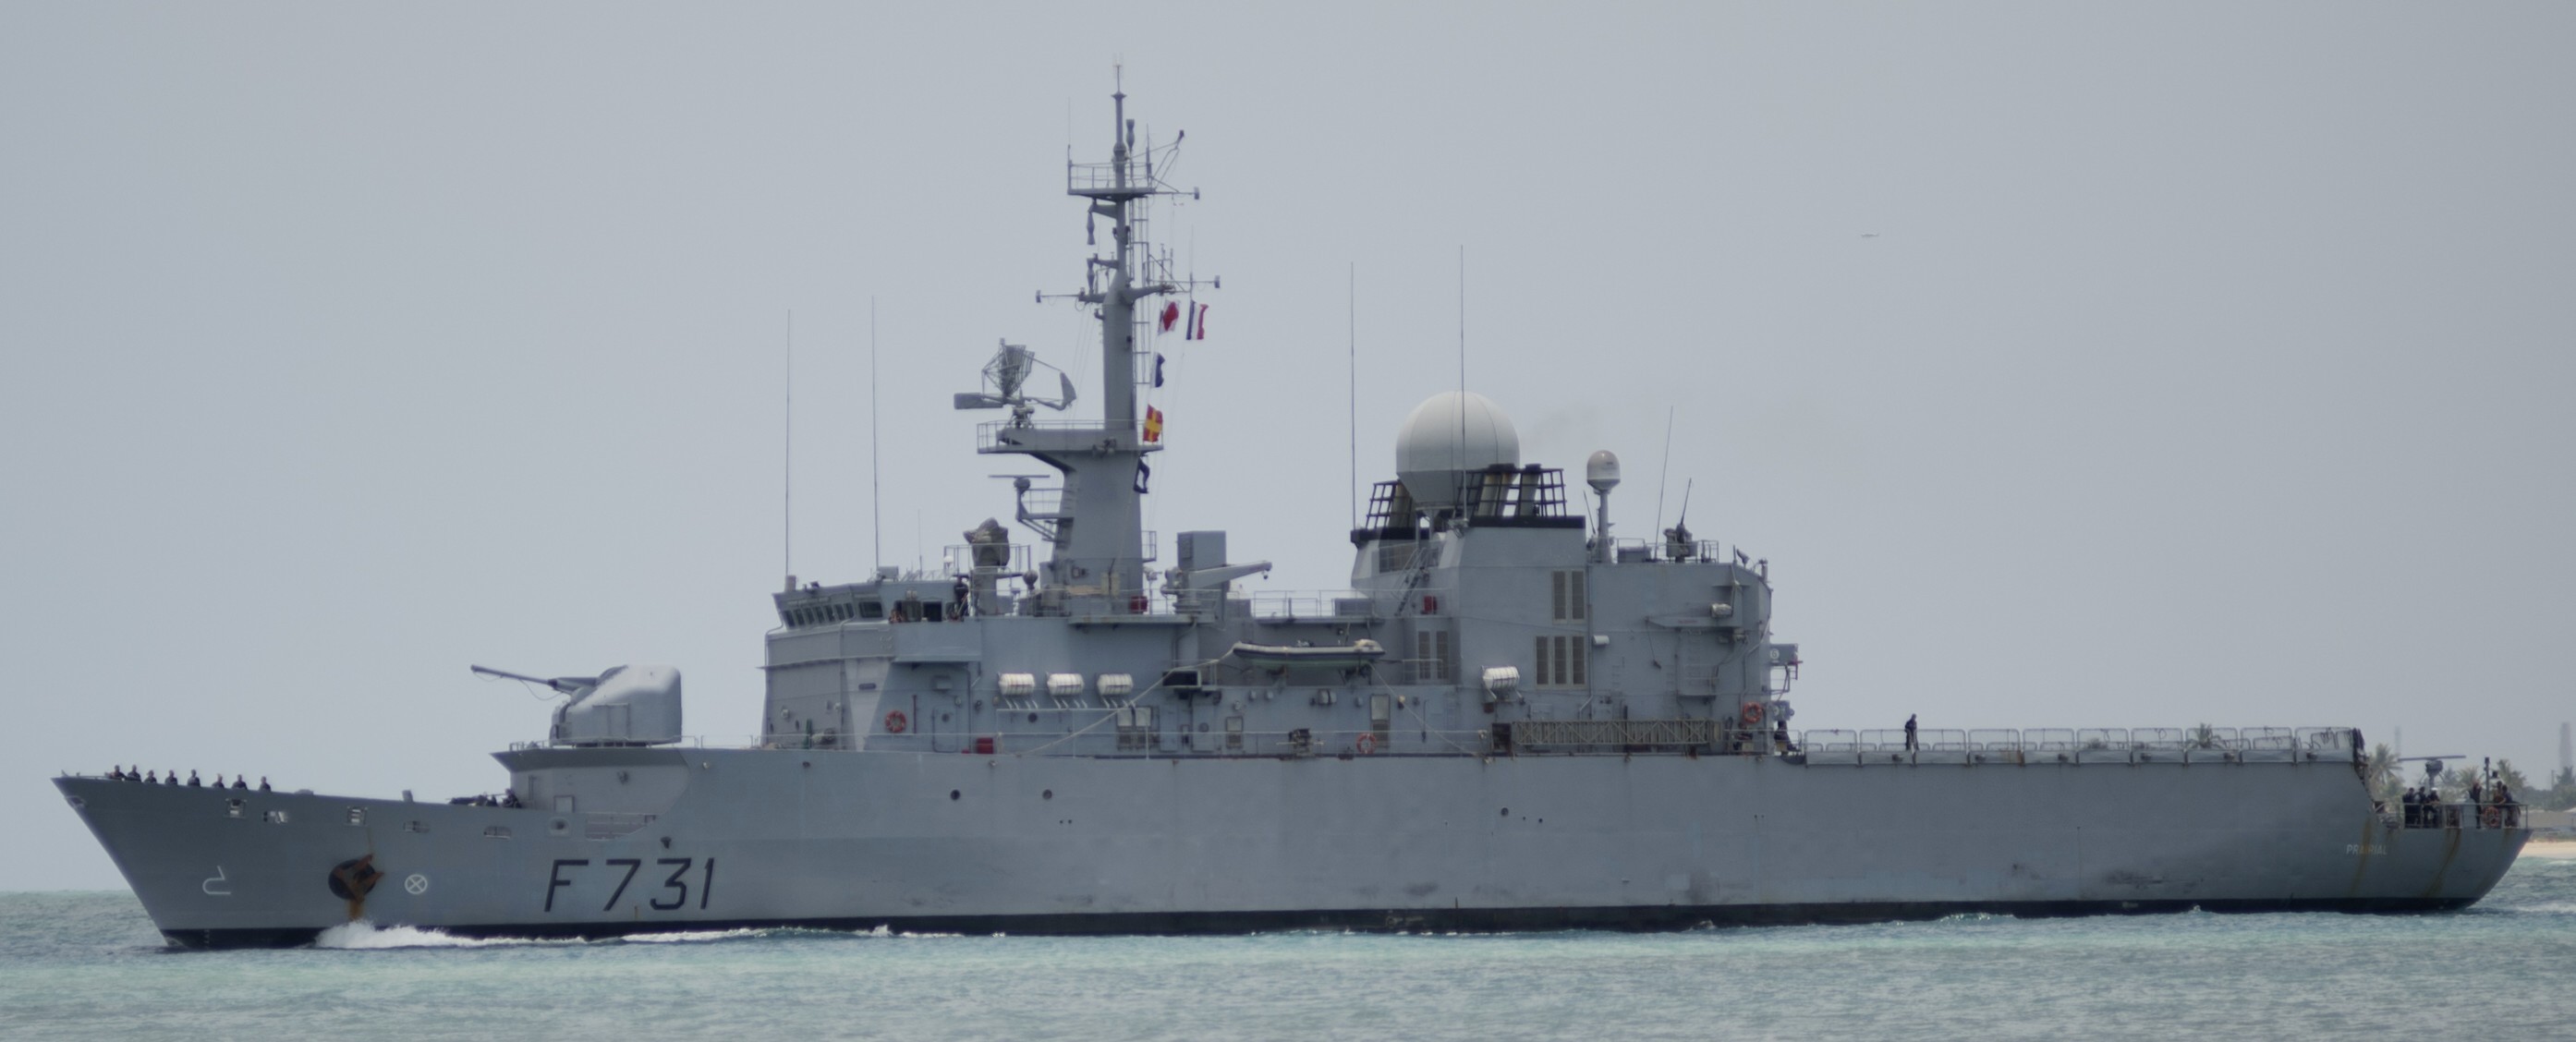 f-731 fs prairial floreal class frigate french navy marine nationale fregate surveillance 36